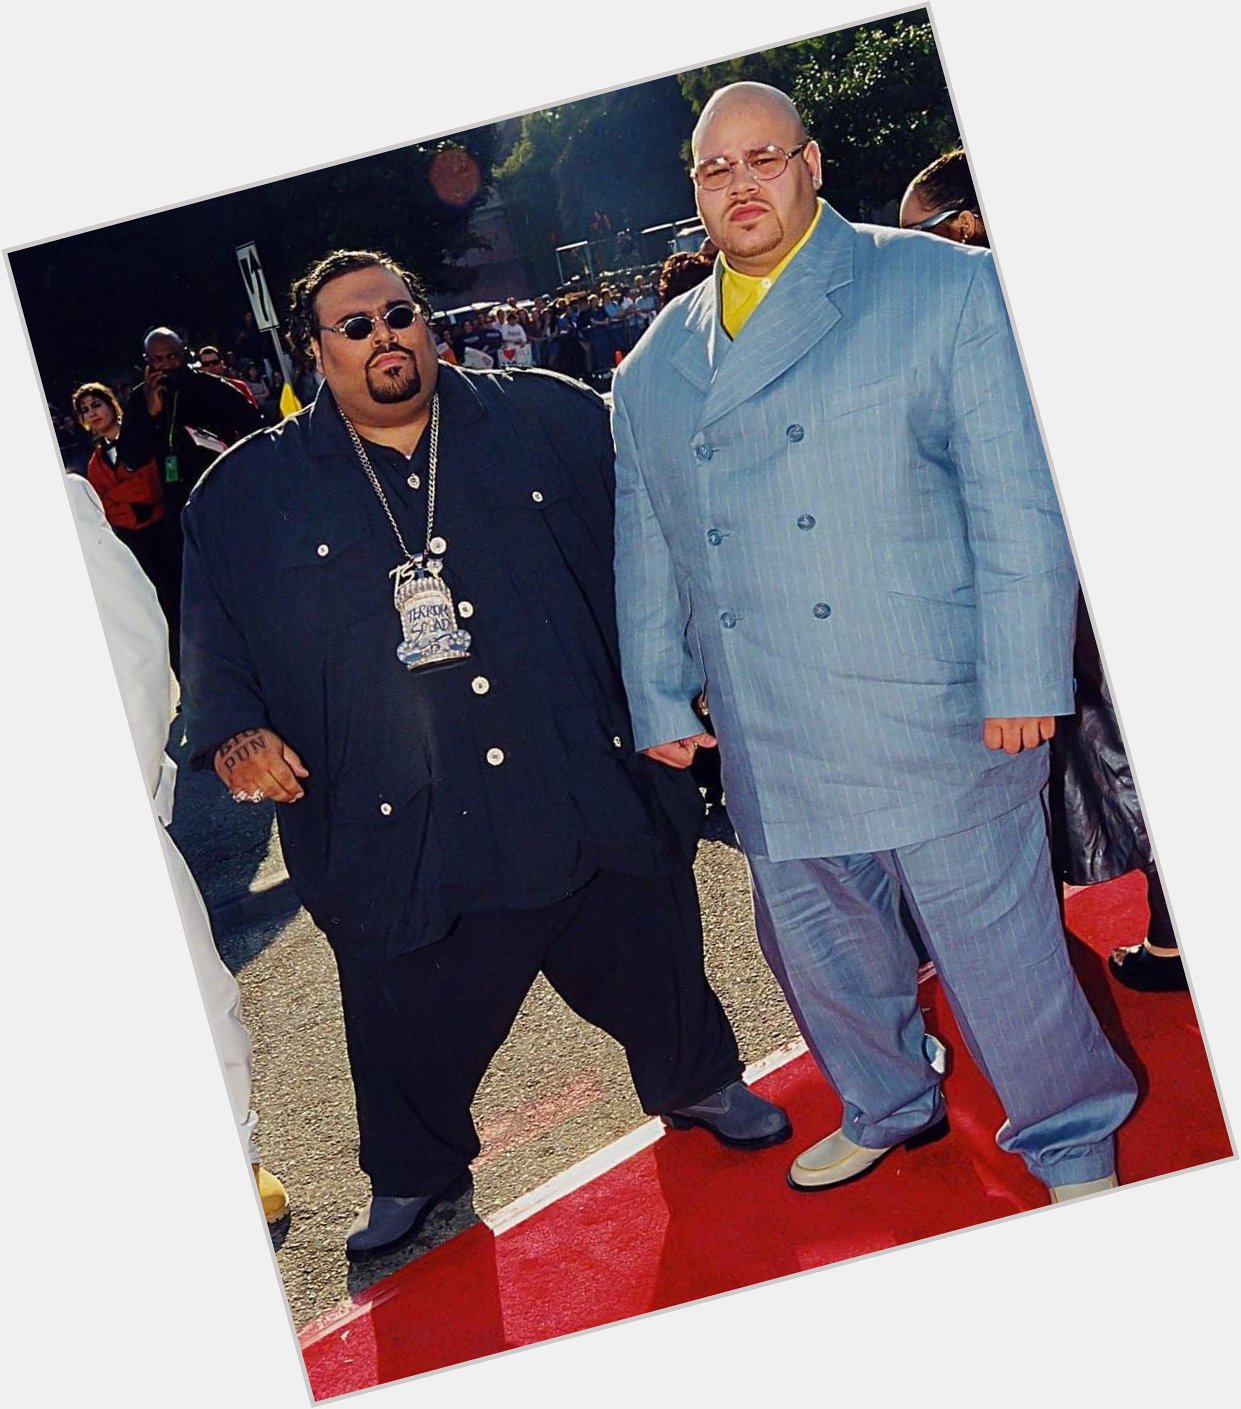 Big Pun & Fat Joe at the Grammy Awards 1999 Happy Birthday Fat Joe     